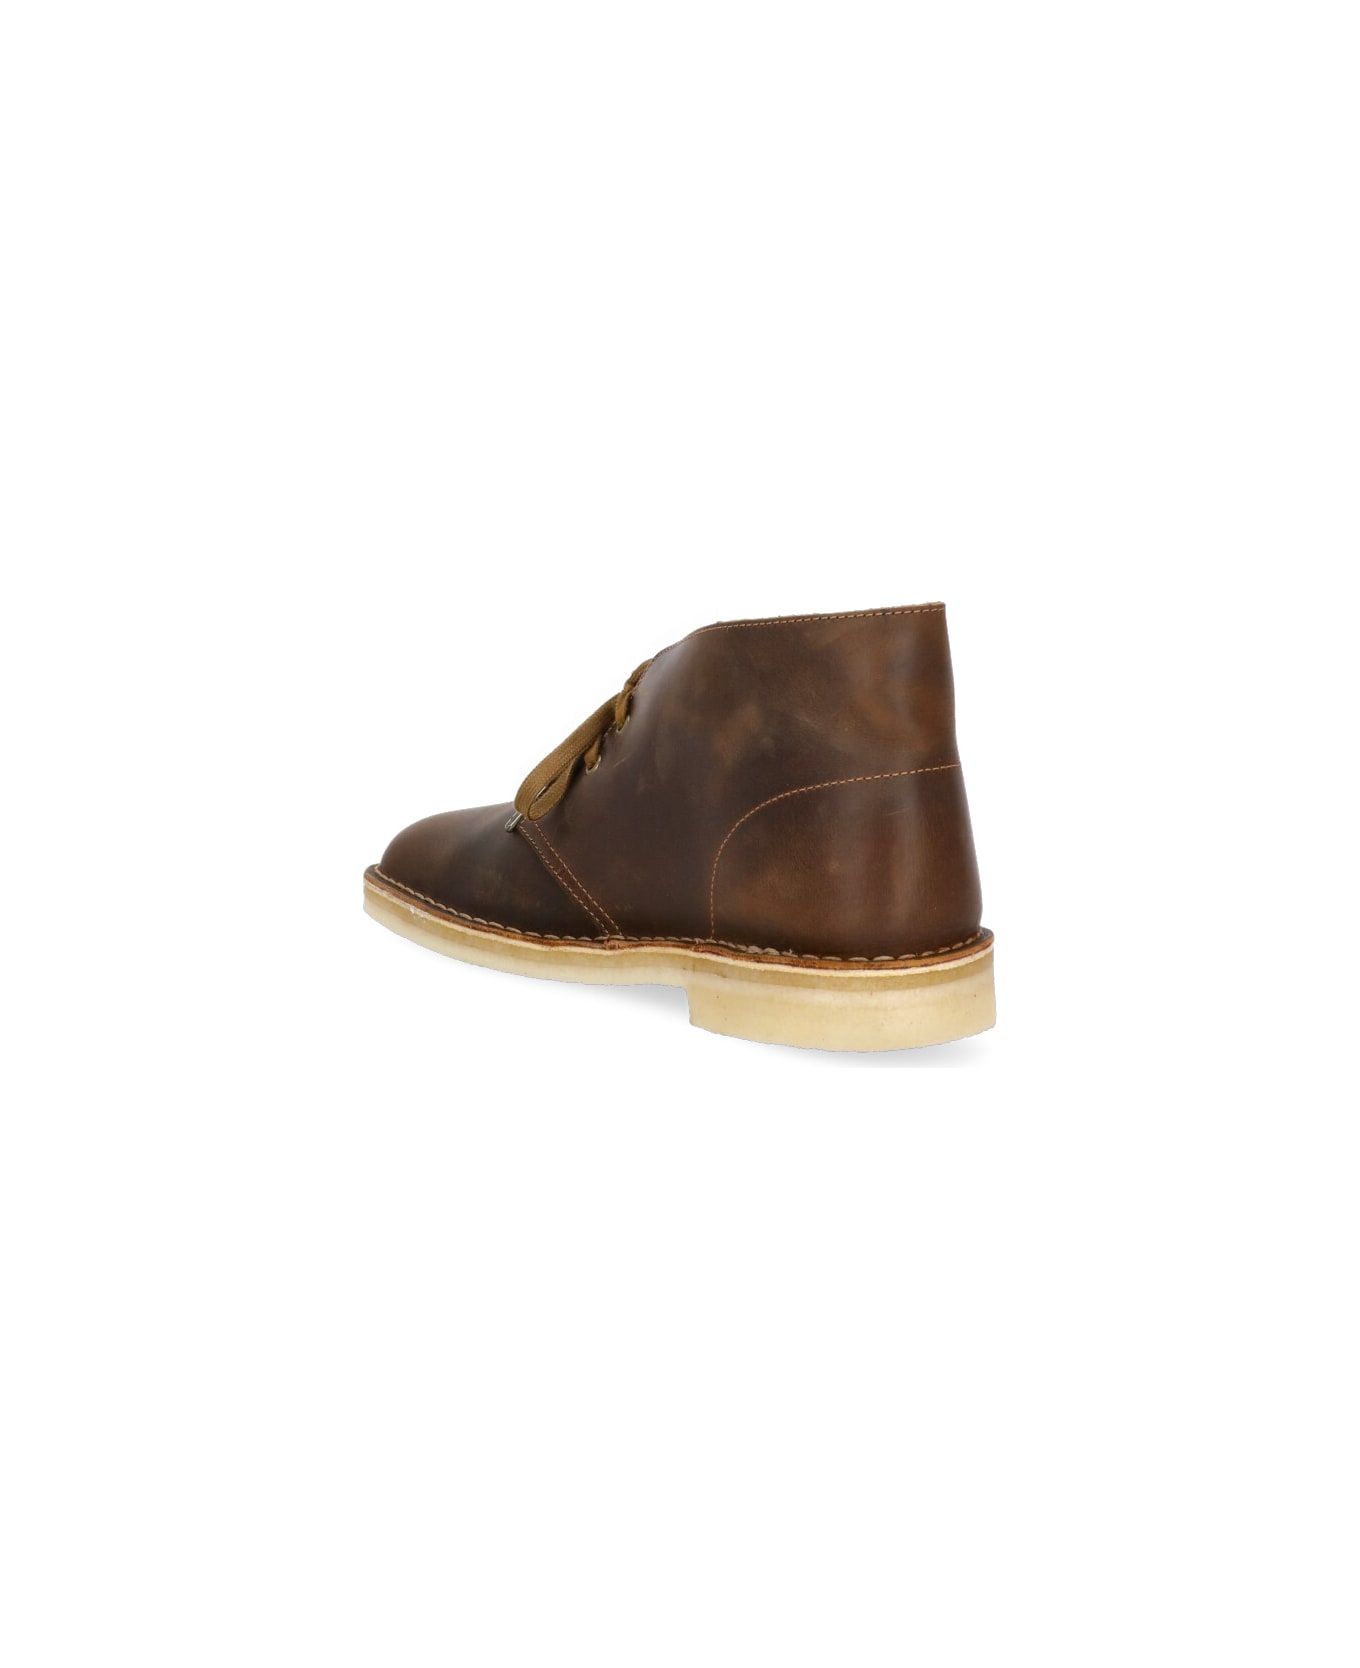 Clarks Desert Boots - Brown